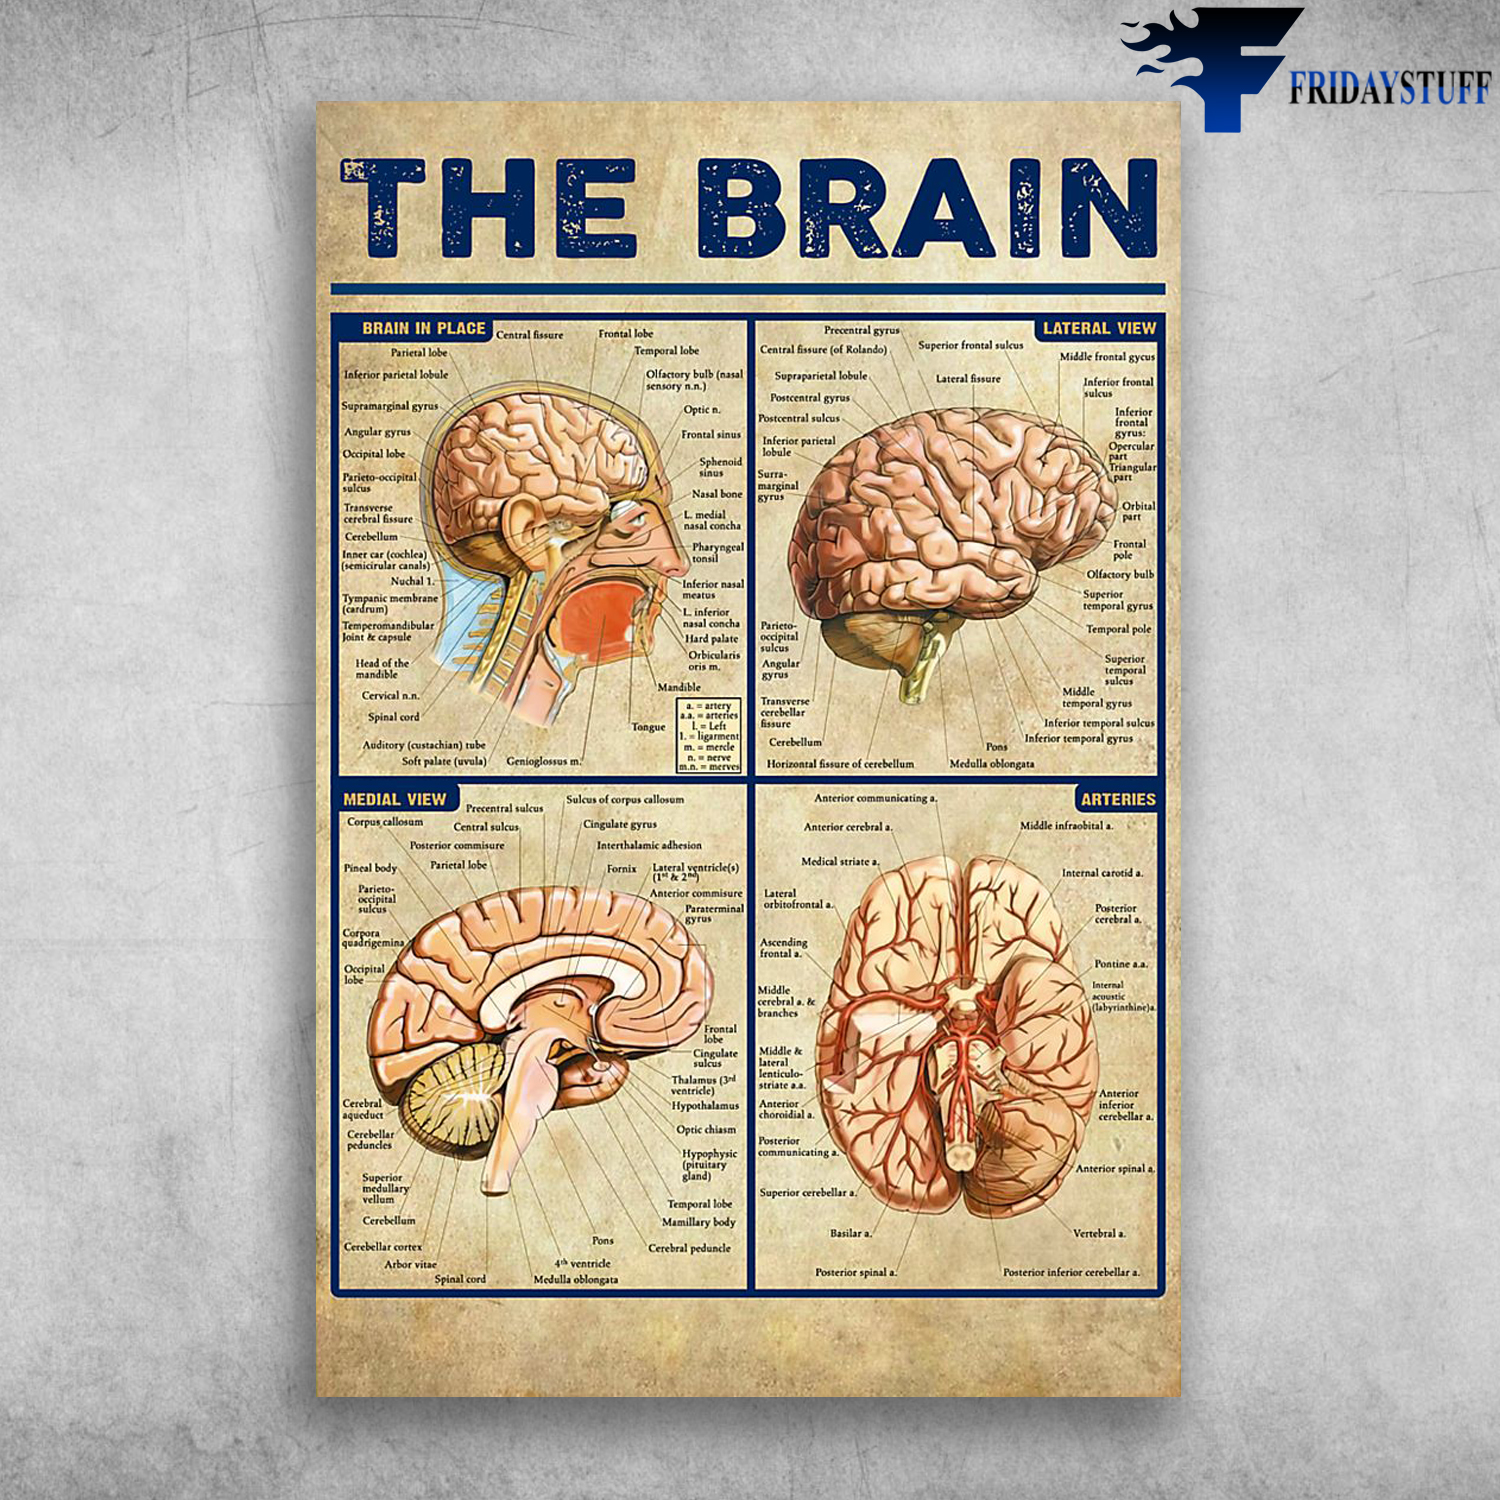 The Brain Anatomy Of The Human Brain